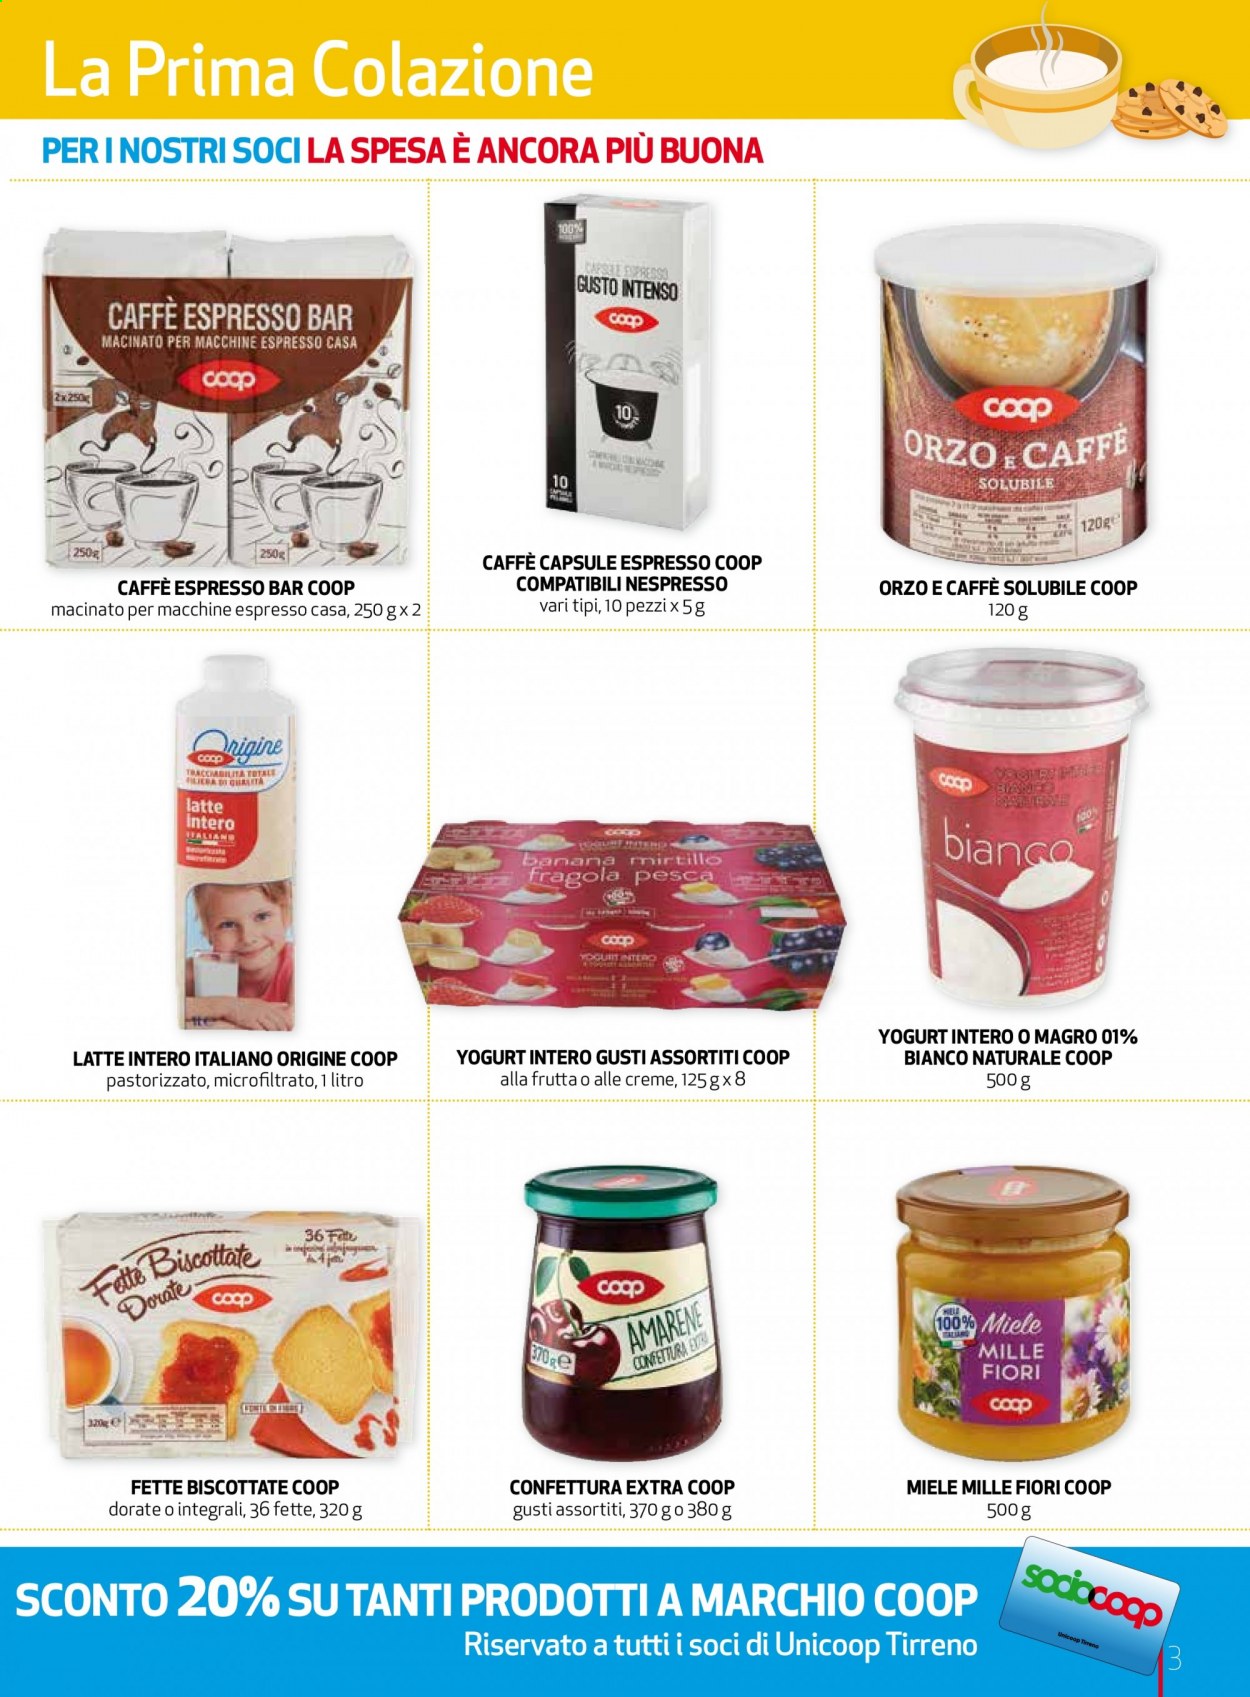 thumbnail - Volantino Coop - 28/1/2021 - 24/3/2021 - Prodotti in offerta - fette biscottate, yogurt, latte, orzo, miele, miele millefiori, confettura, caffè, caffè solubile, caffè in capsule, caffè espresso. Pagina 3.